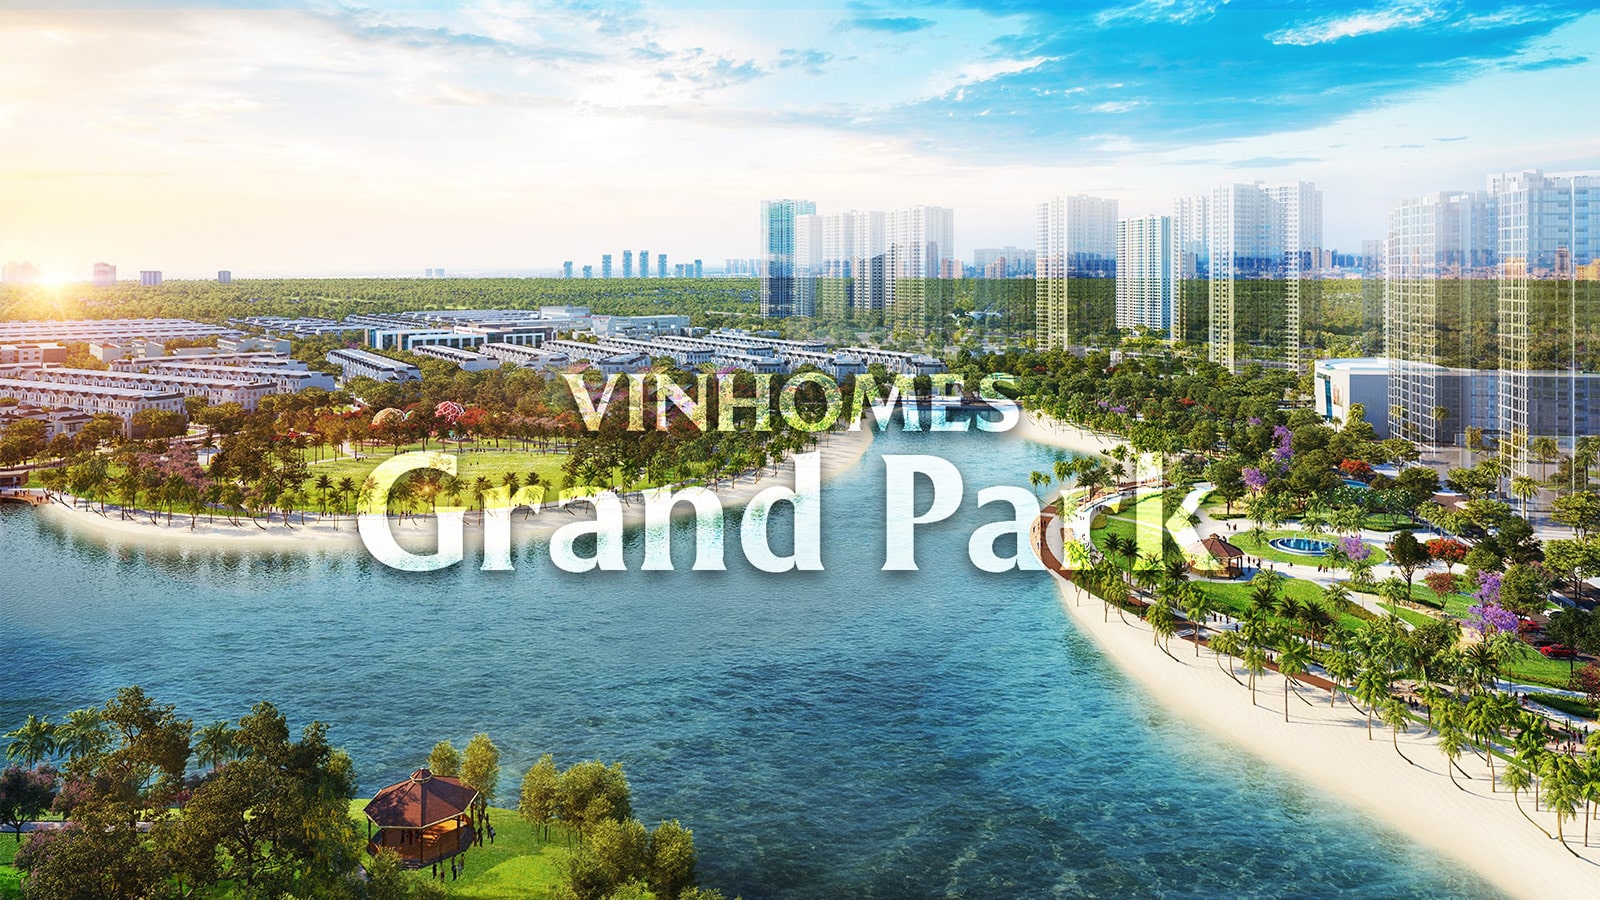 Vinhomes Grand Park: Customer Journey Mapping